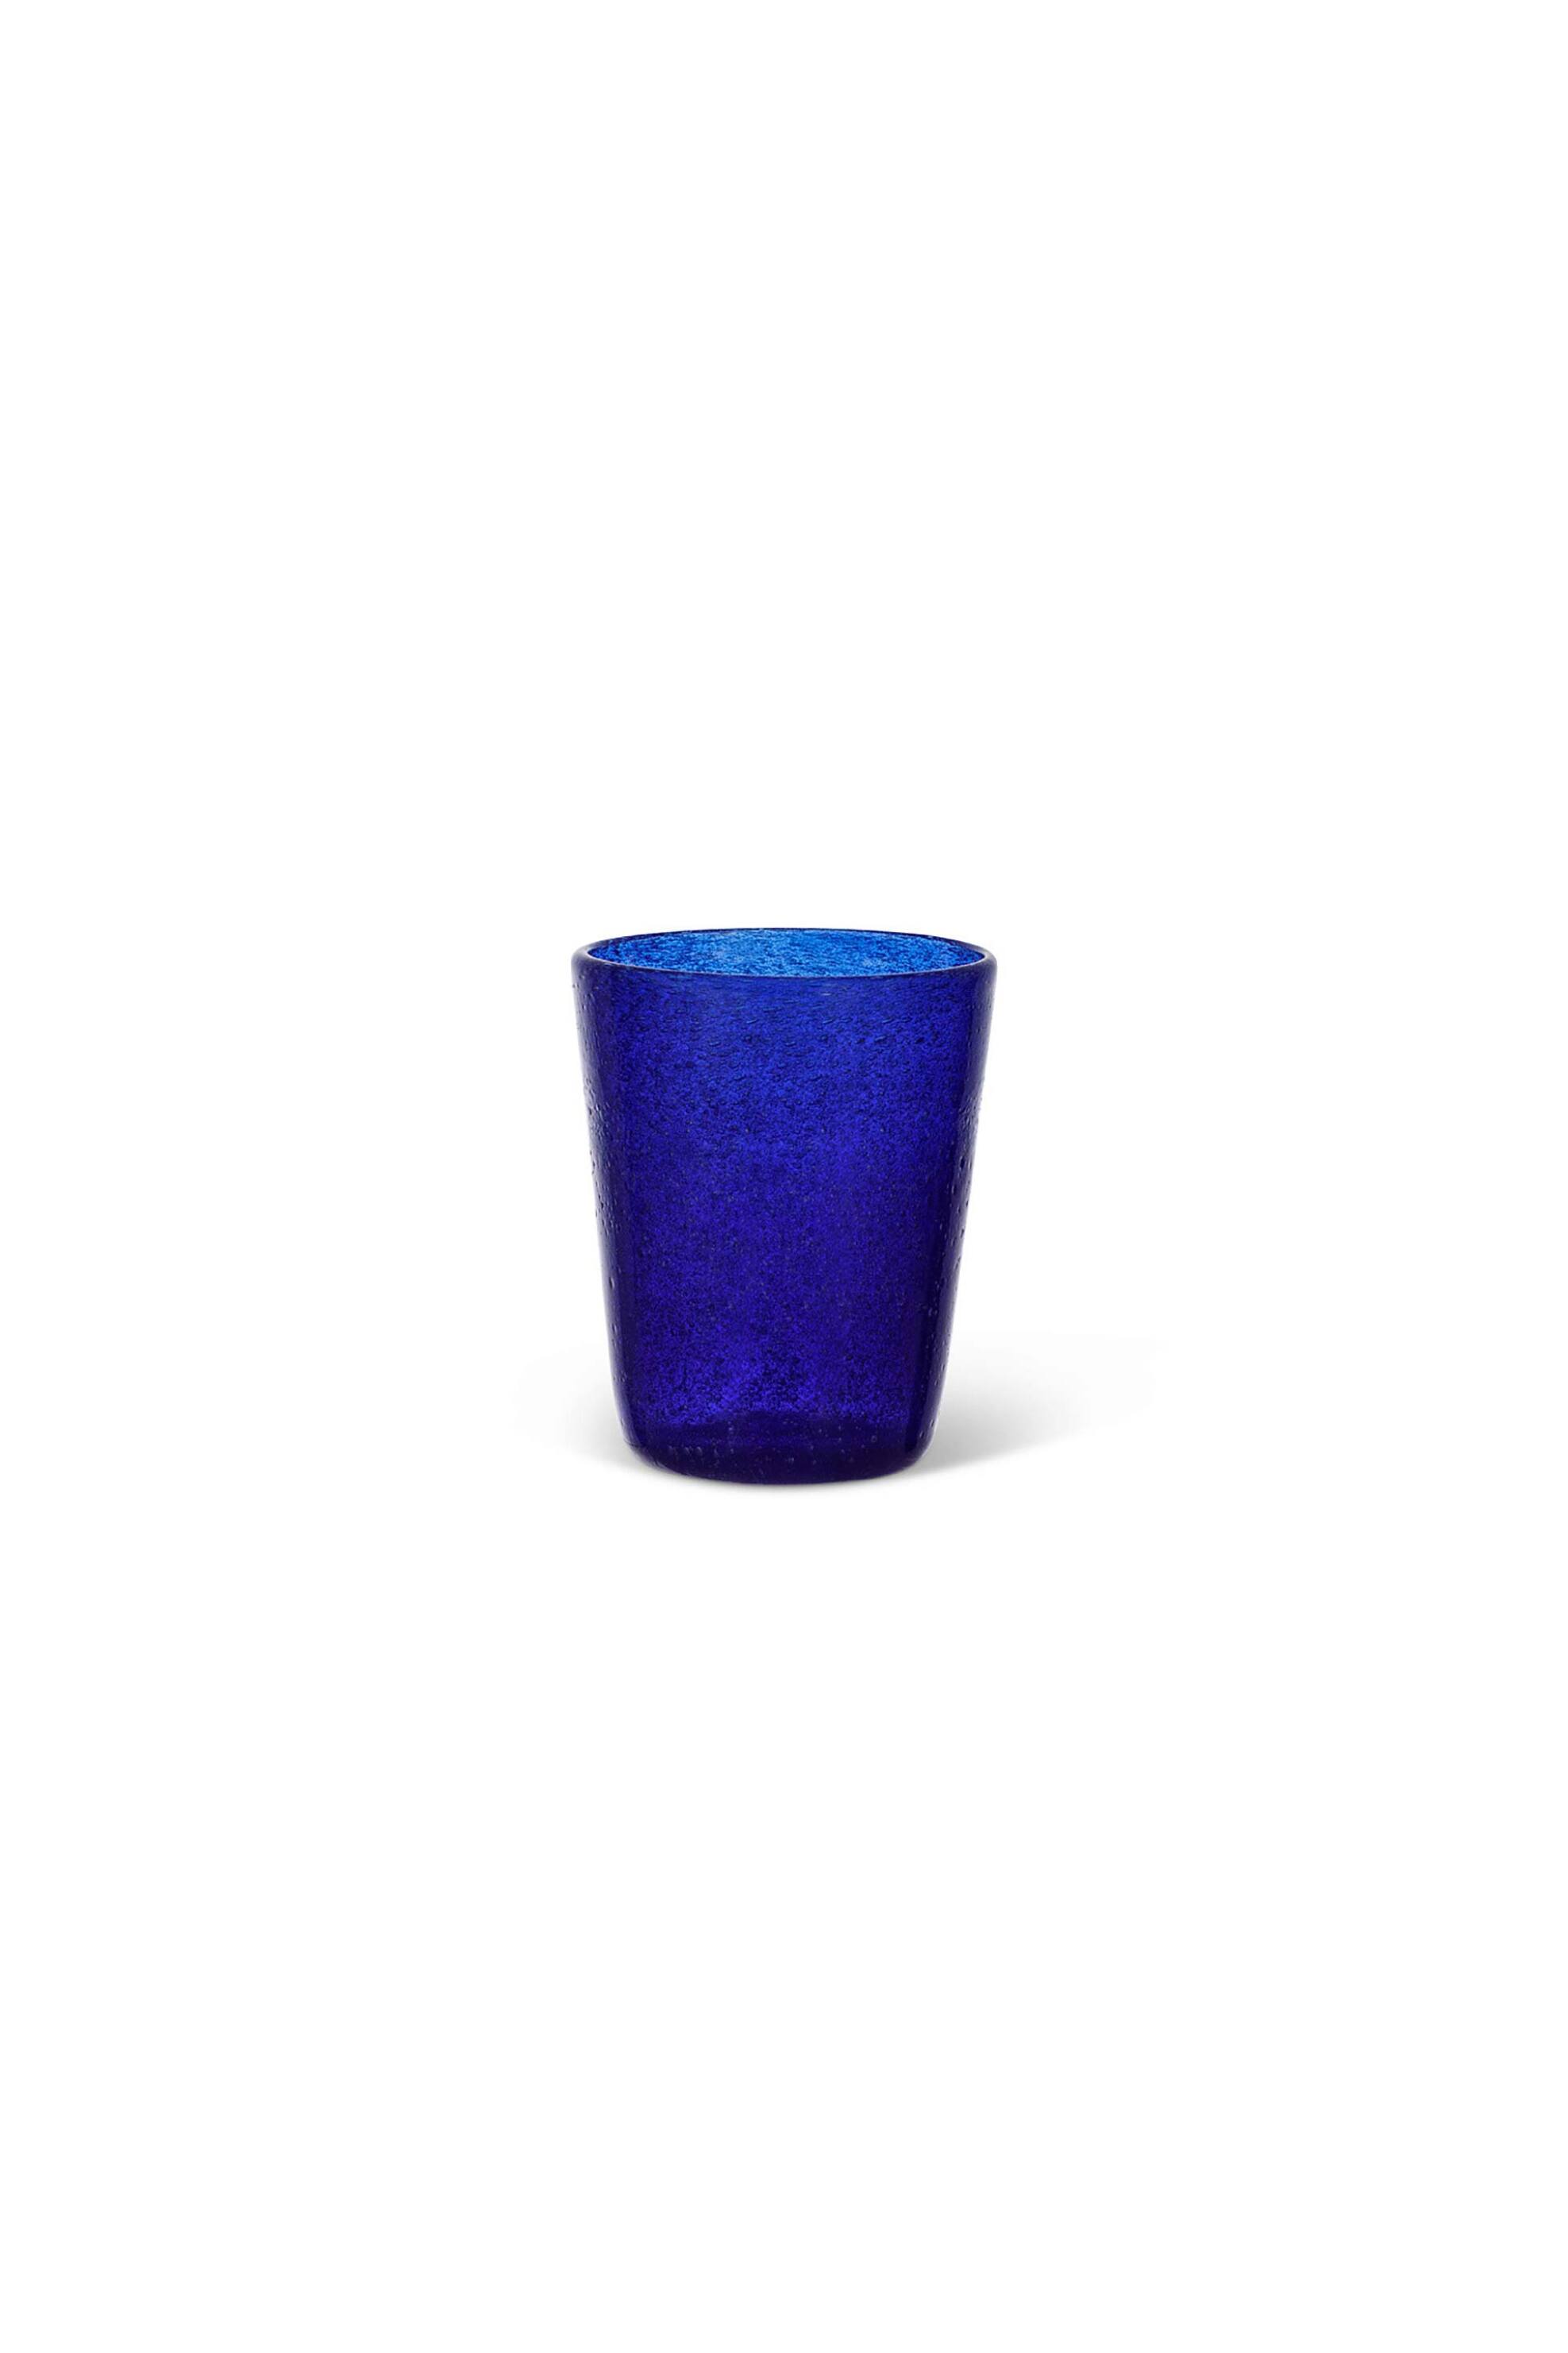 Home > ΚΟΥΖΙΝΑ > Υαλικά > Ποτήρια Coincasa ποτήρι γυάλινο με ανάγλυφο σχέδιο 10 x 8 cm - 007212462 Μπλε